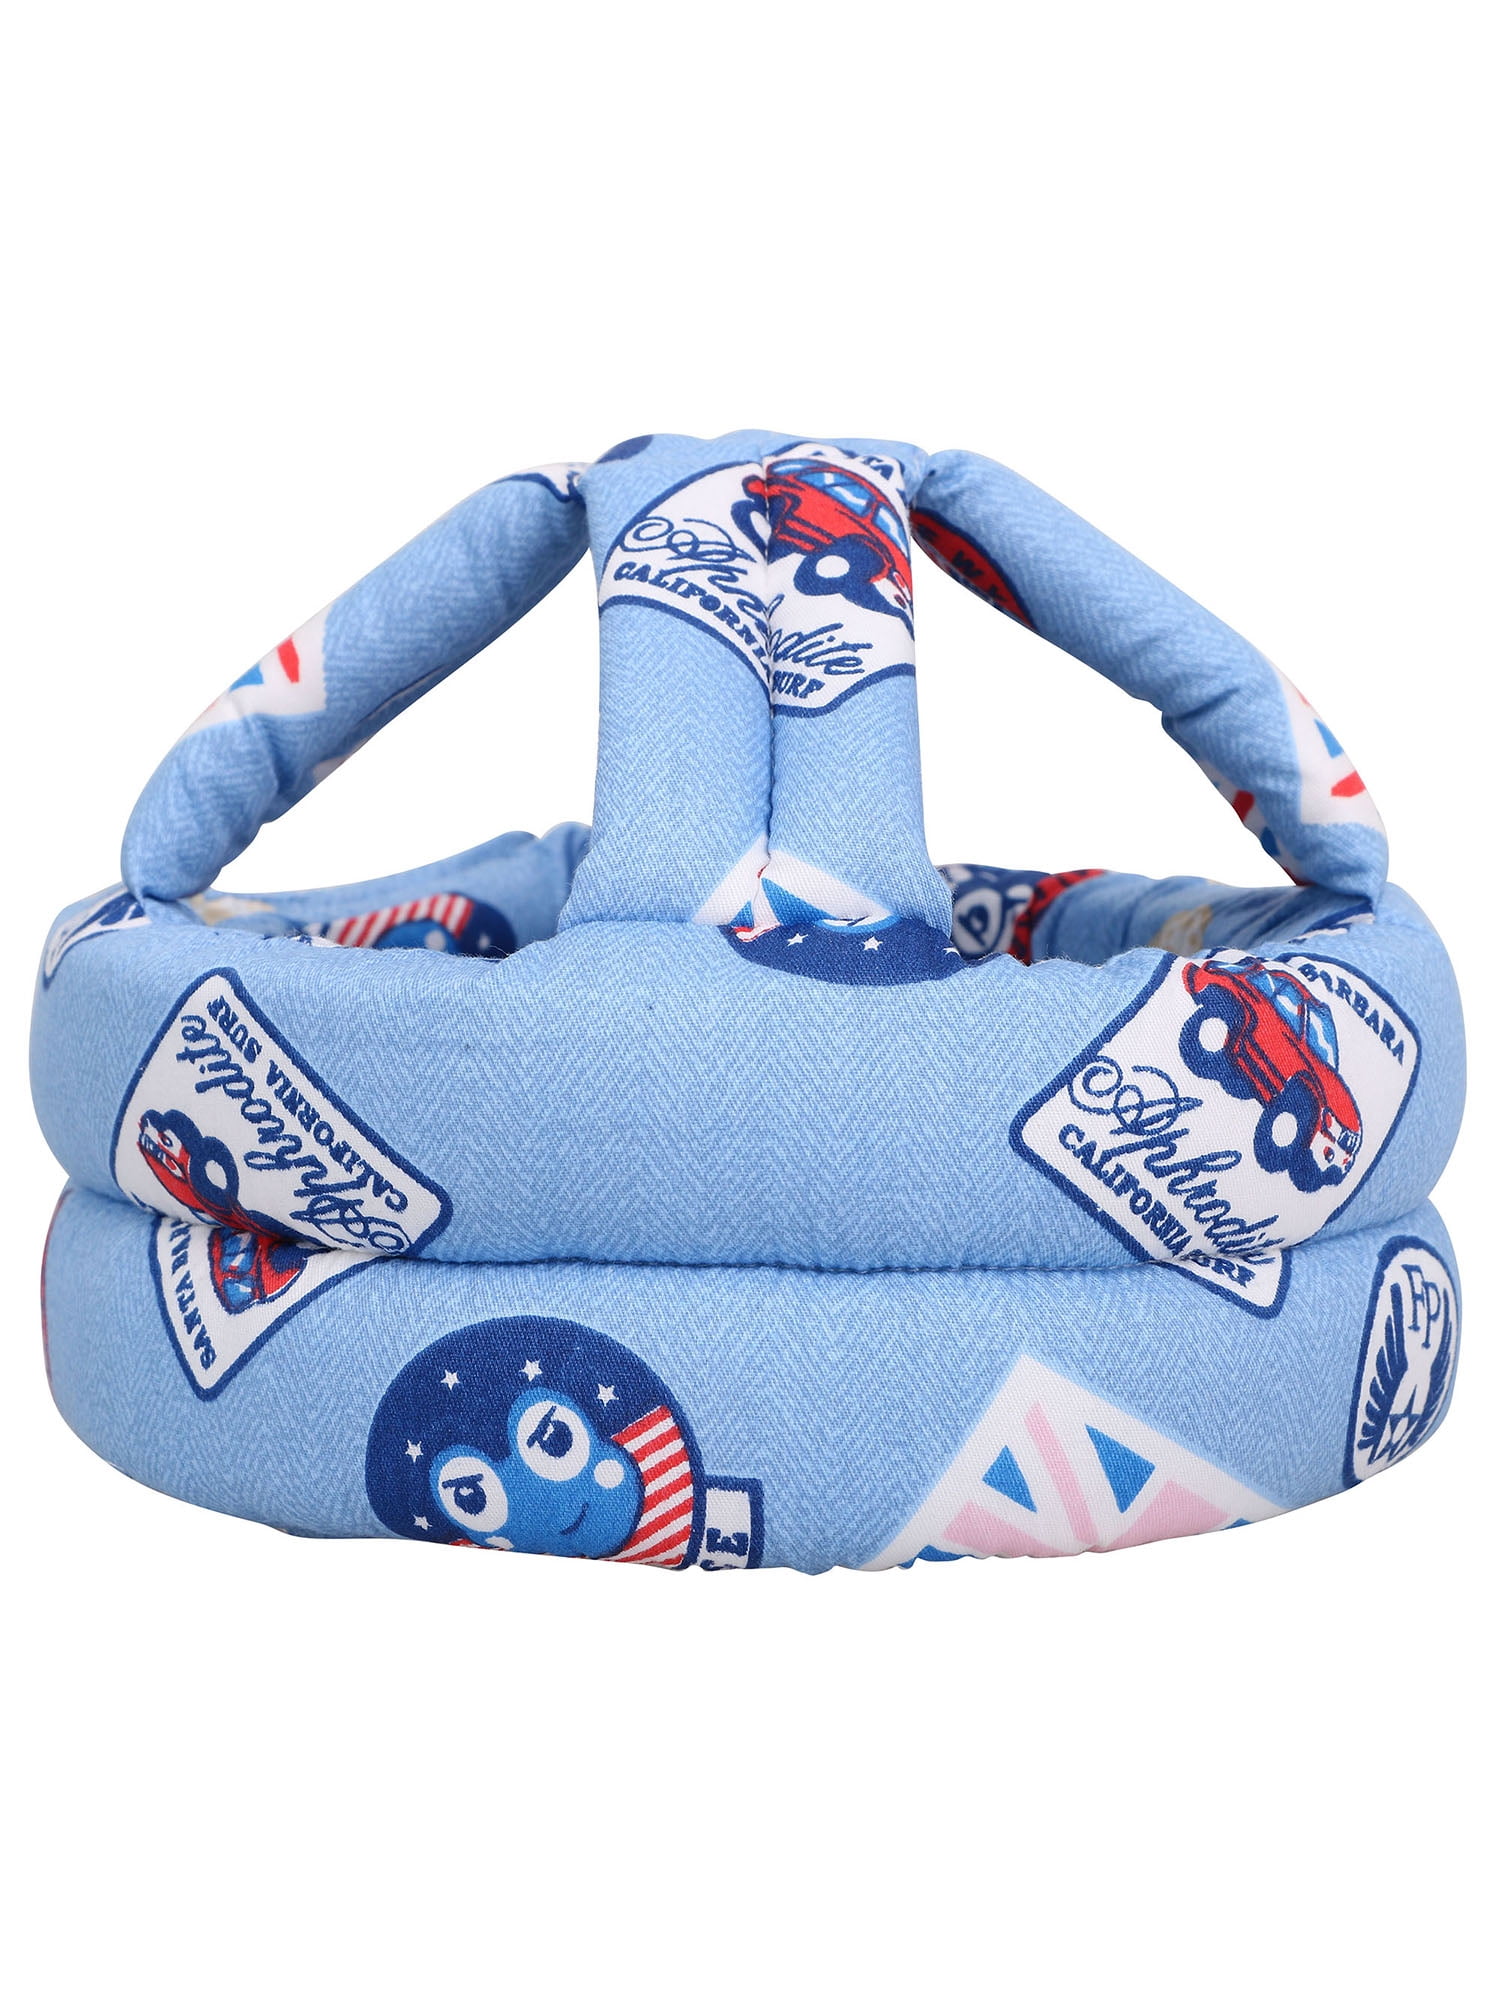 Simplicity Baby Infant Toddler No Bumps Safety Helmet Head Cushion Bumper Bonnet 